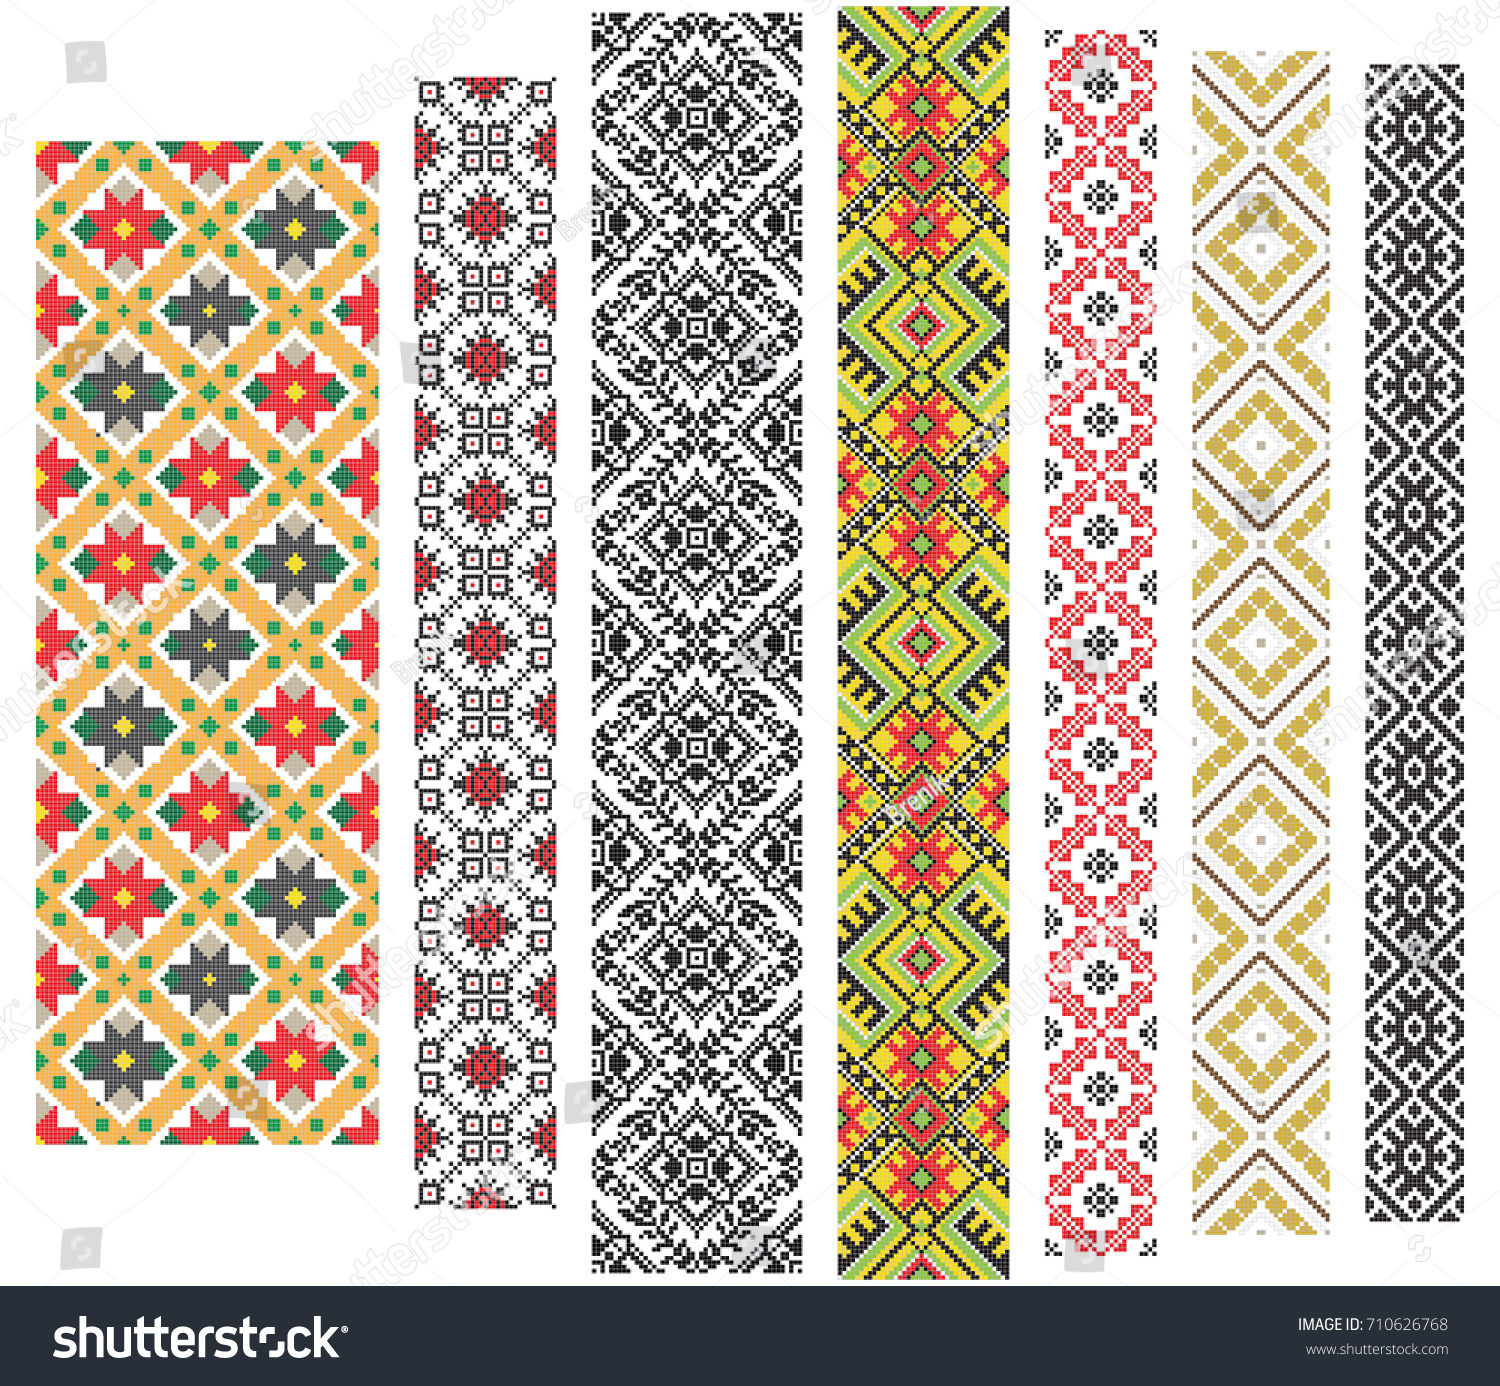 SVG of Traditional Moldavian folk art knitted embroidery pattern.  svg